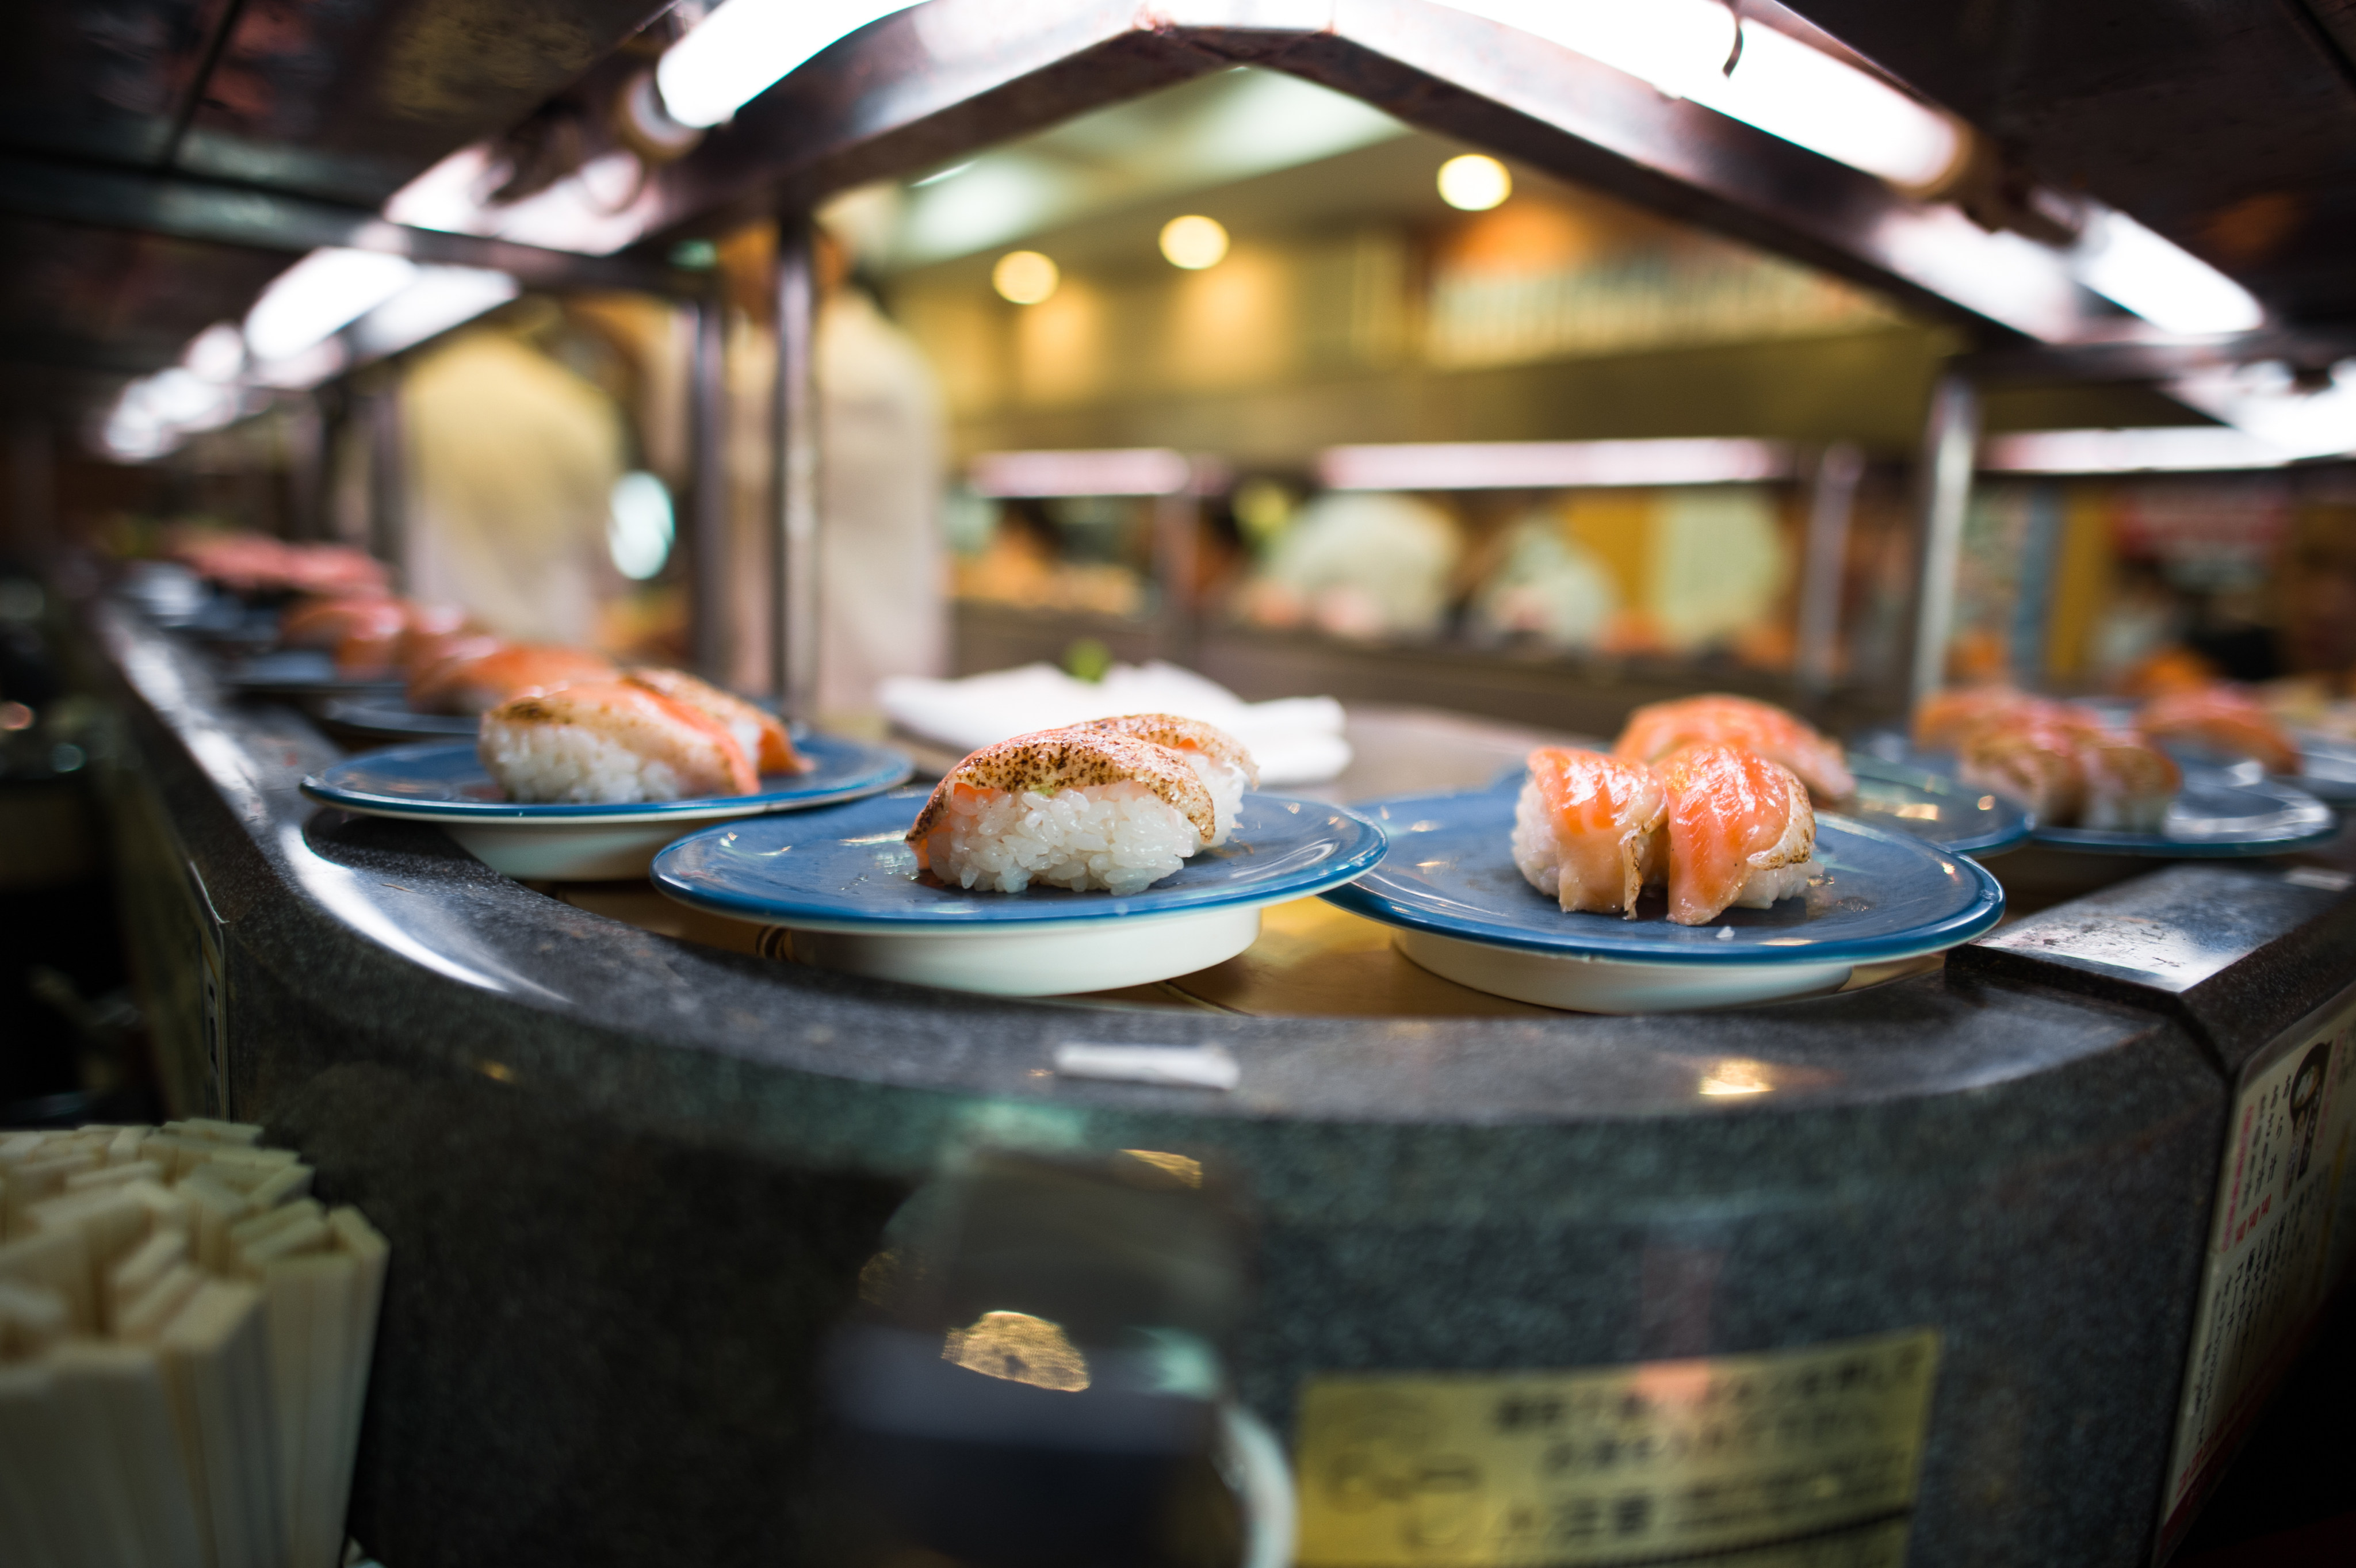 Conveyor belt sushi restaurants hit by sushi terrorism. Photo: Shutterstock